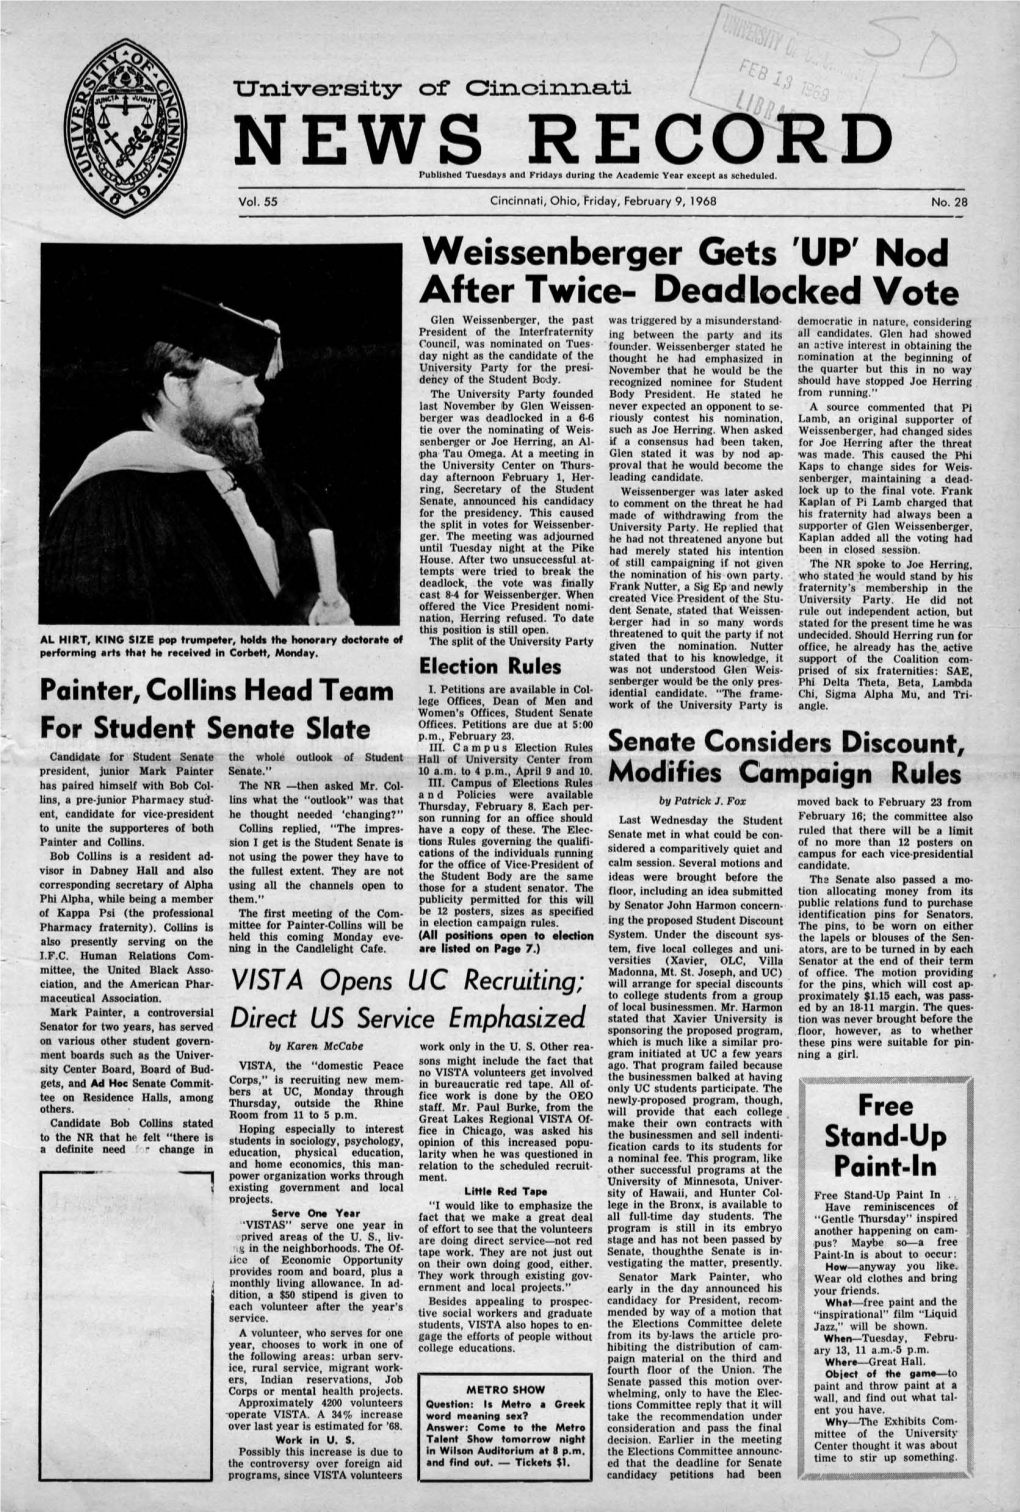 University of Cincinnati News Record. Friday, February 9, 1968. Vol. LV